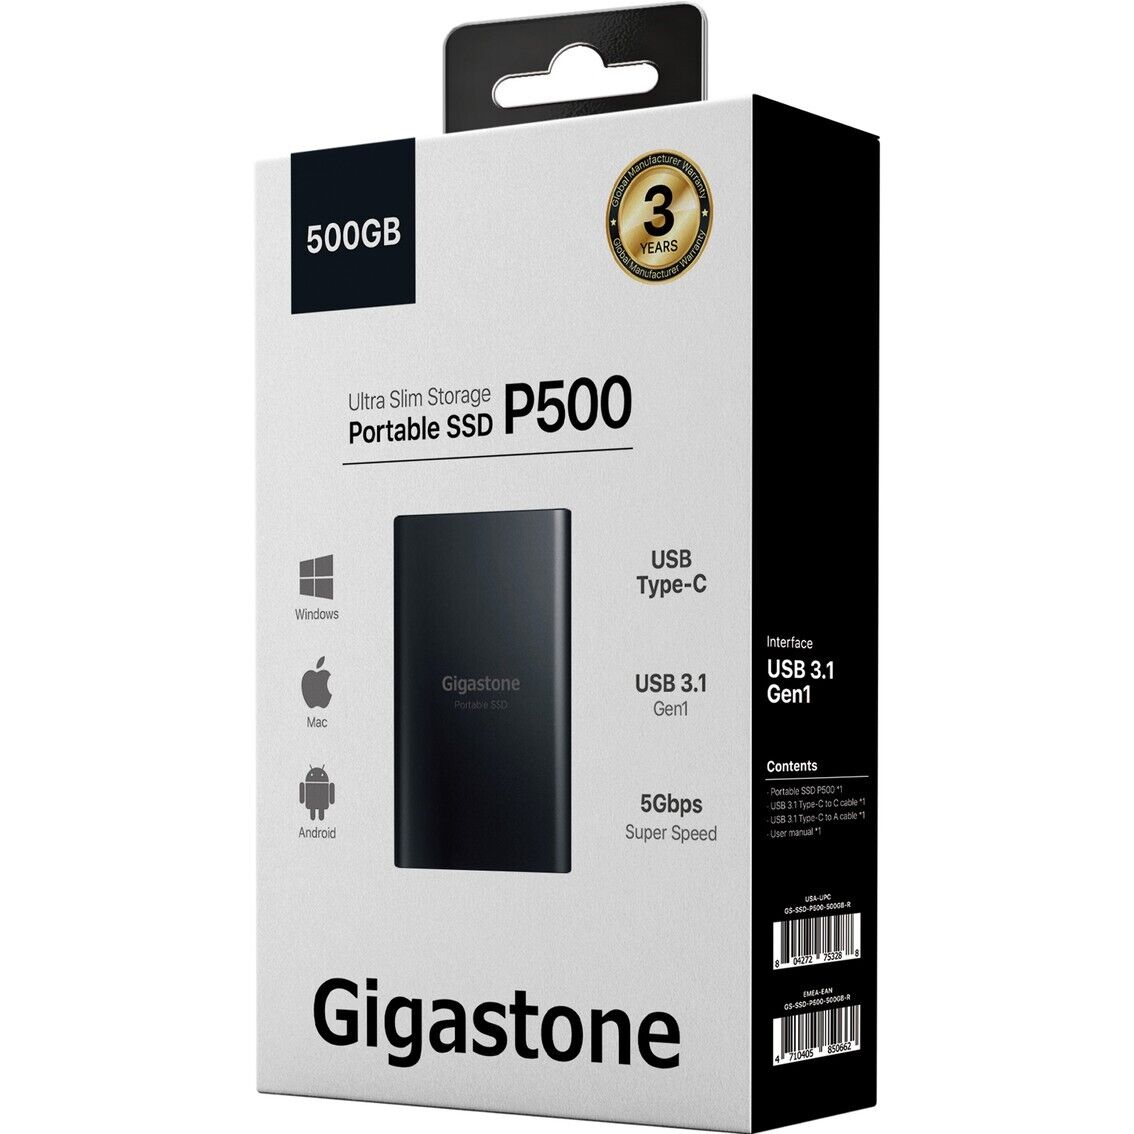 Gigastone 500GB Portable SSD Ultra Slim 550MB/s. USB 3.1 Type-C Win/Mac/Android